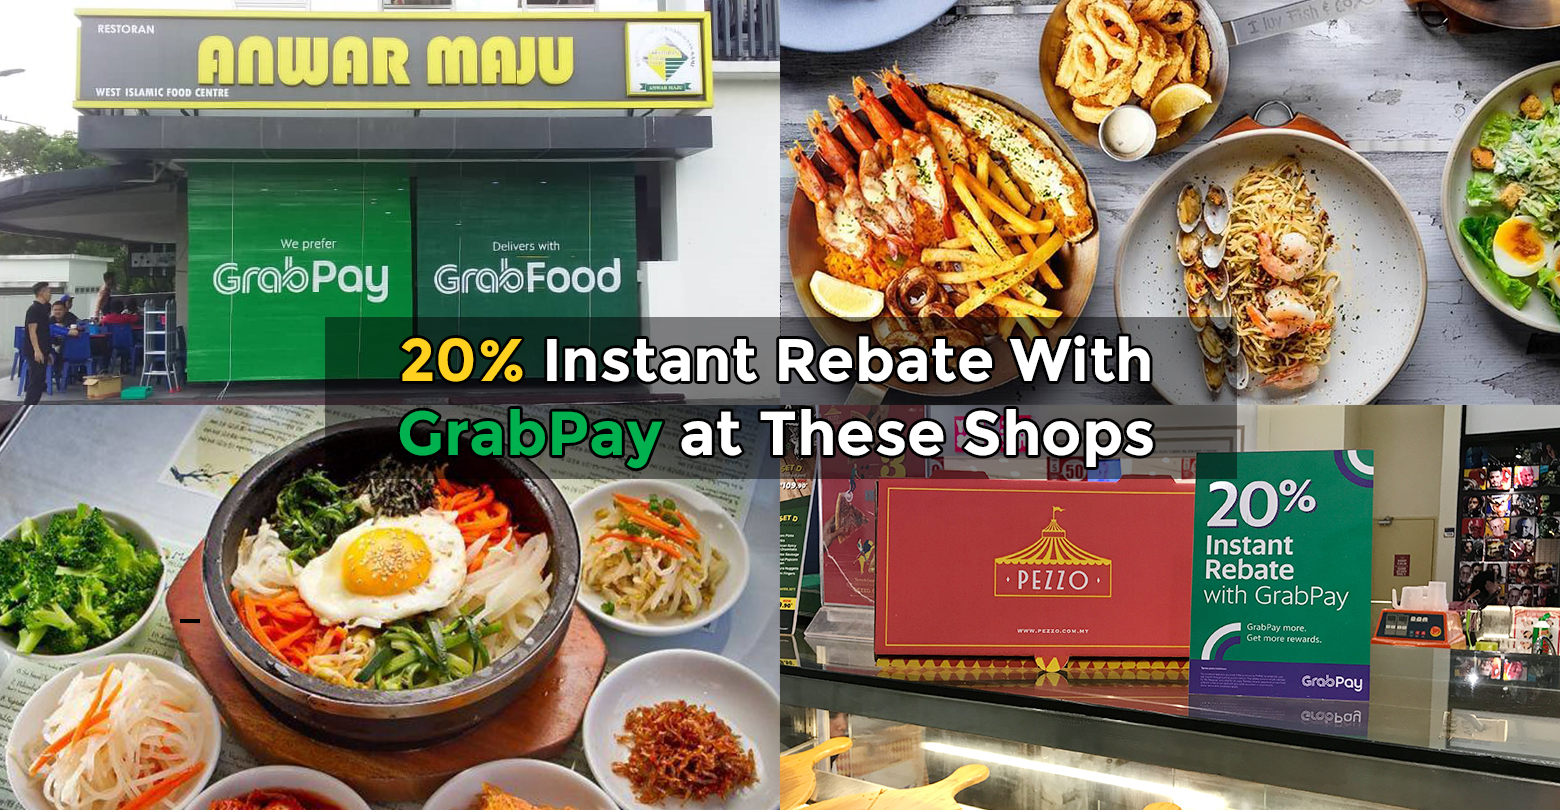 7-muslim-friendly-restaurants-with-20-grabpay-rebate-deal-you-need-to